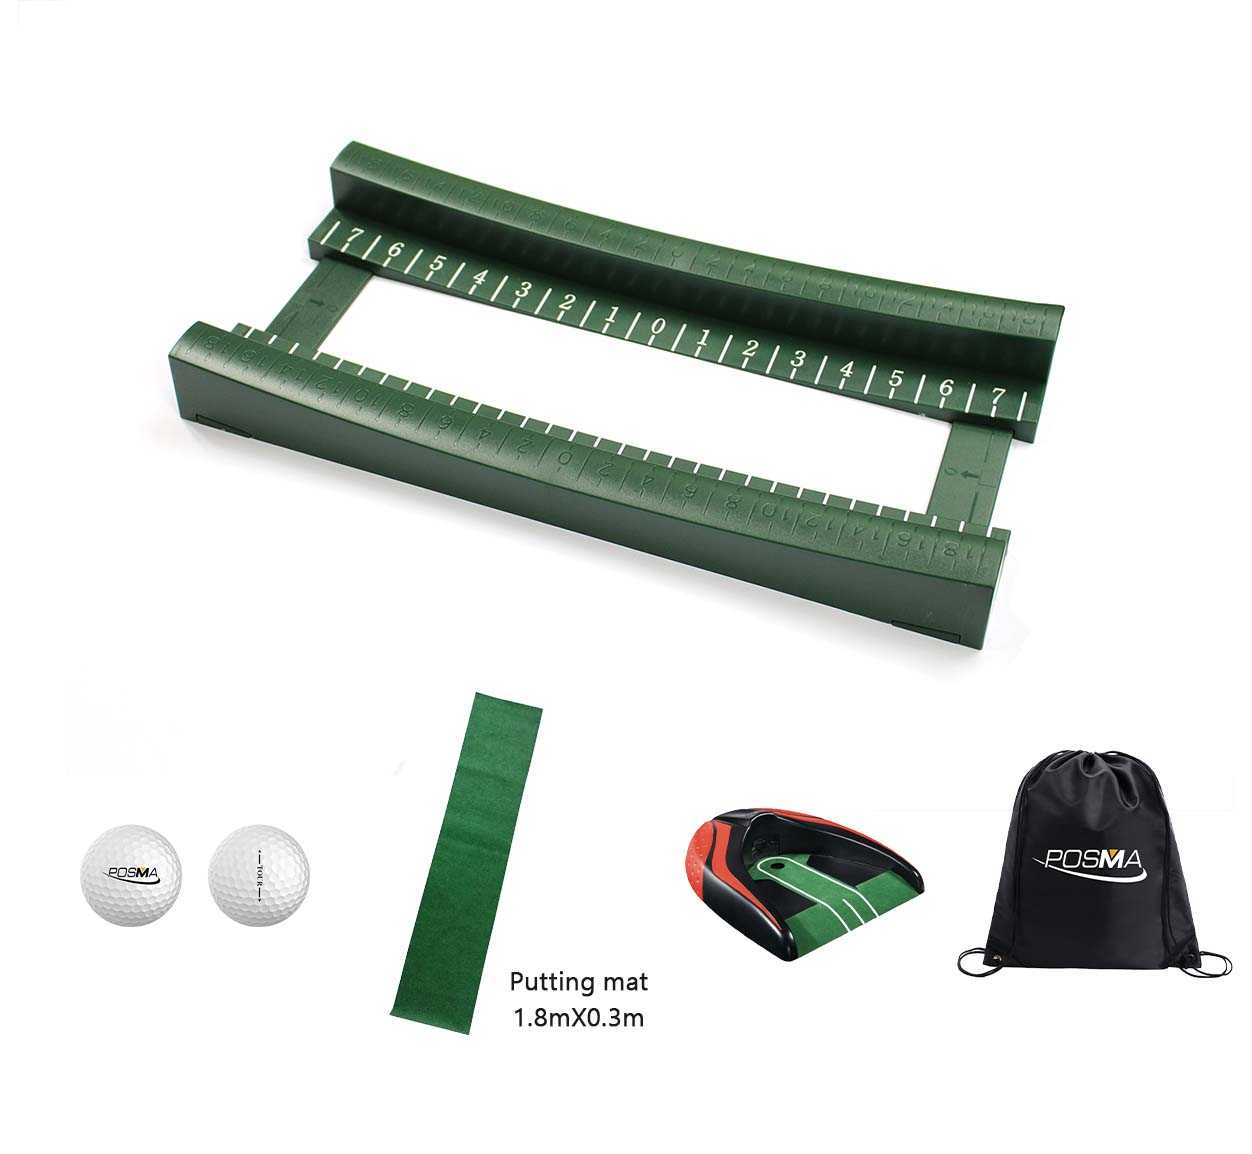 Posma PG100I高爾夫推桿訓練套裝包含推桿訓練短道.自動回球器.推桿練習地毯.雙層比賽球2個送輕便背包